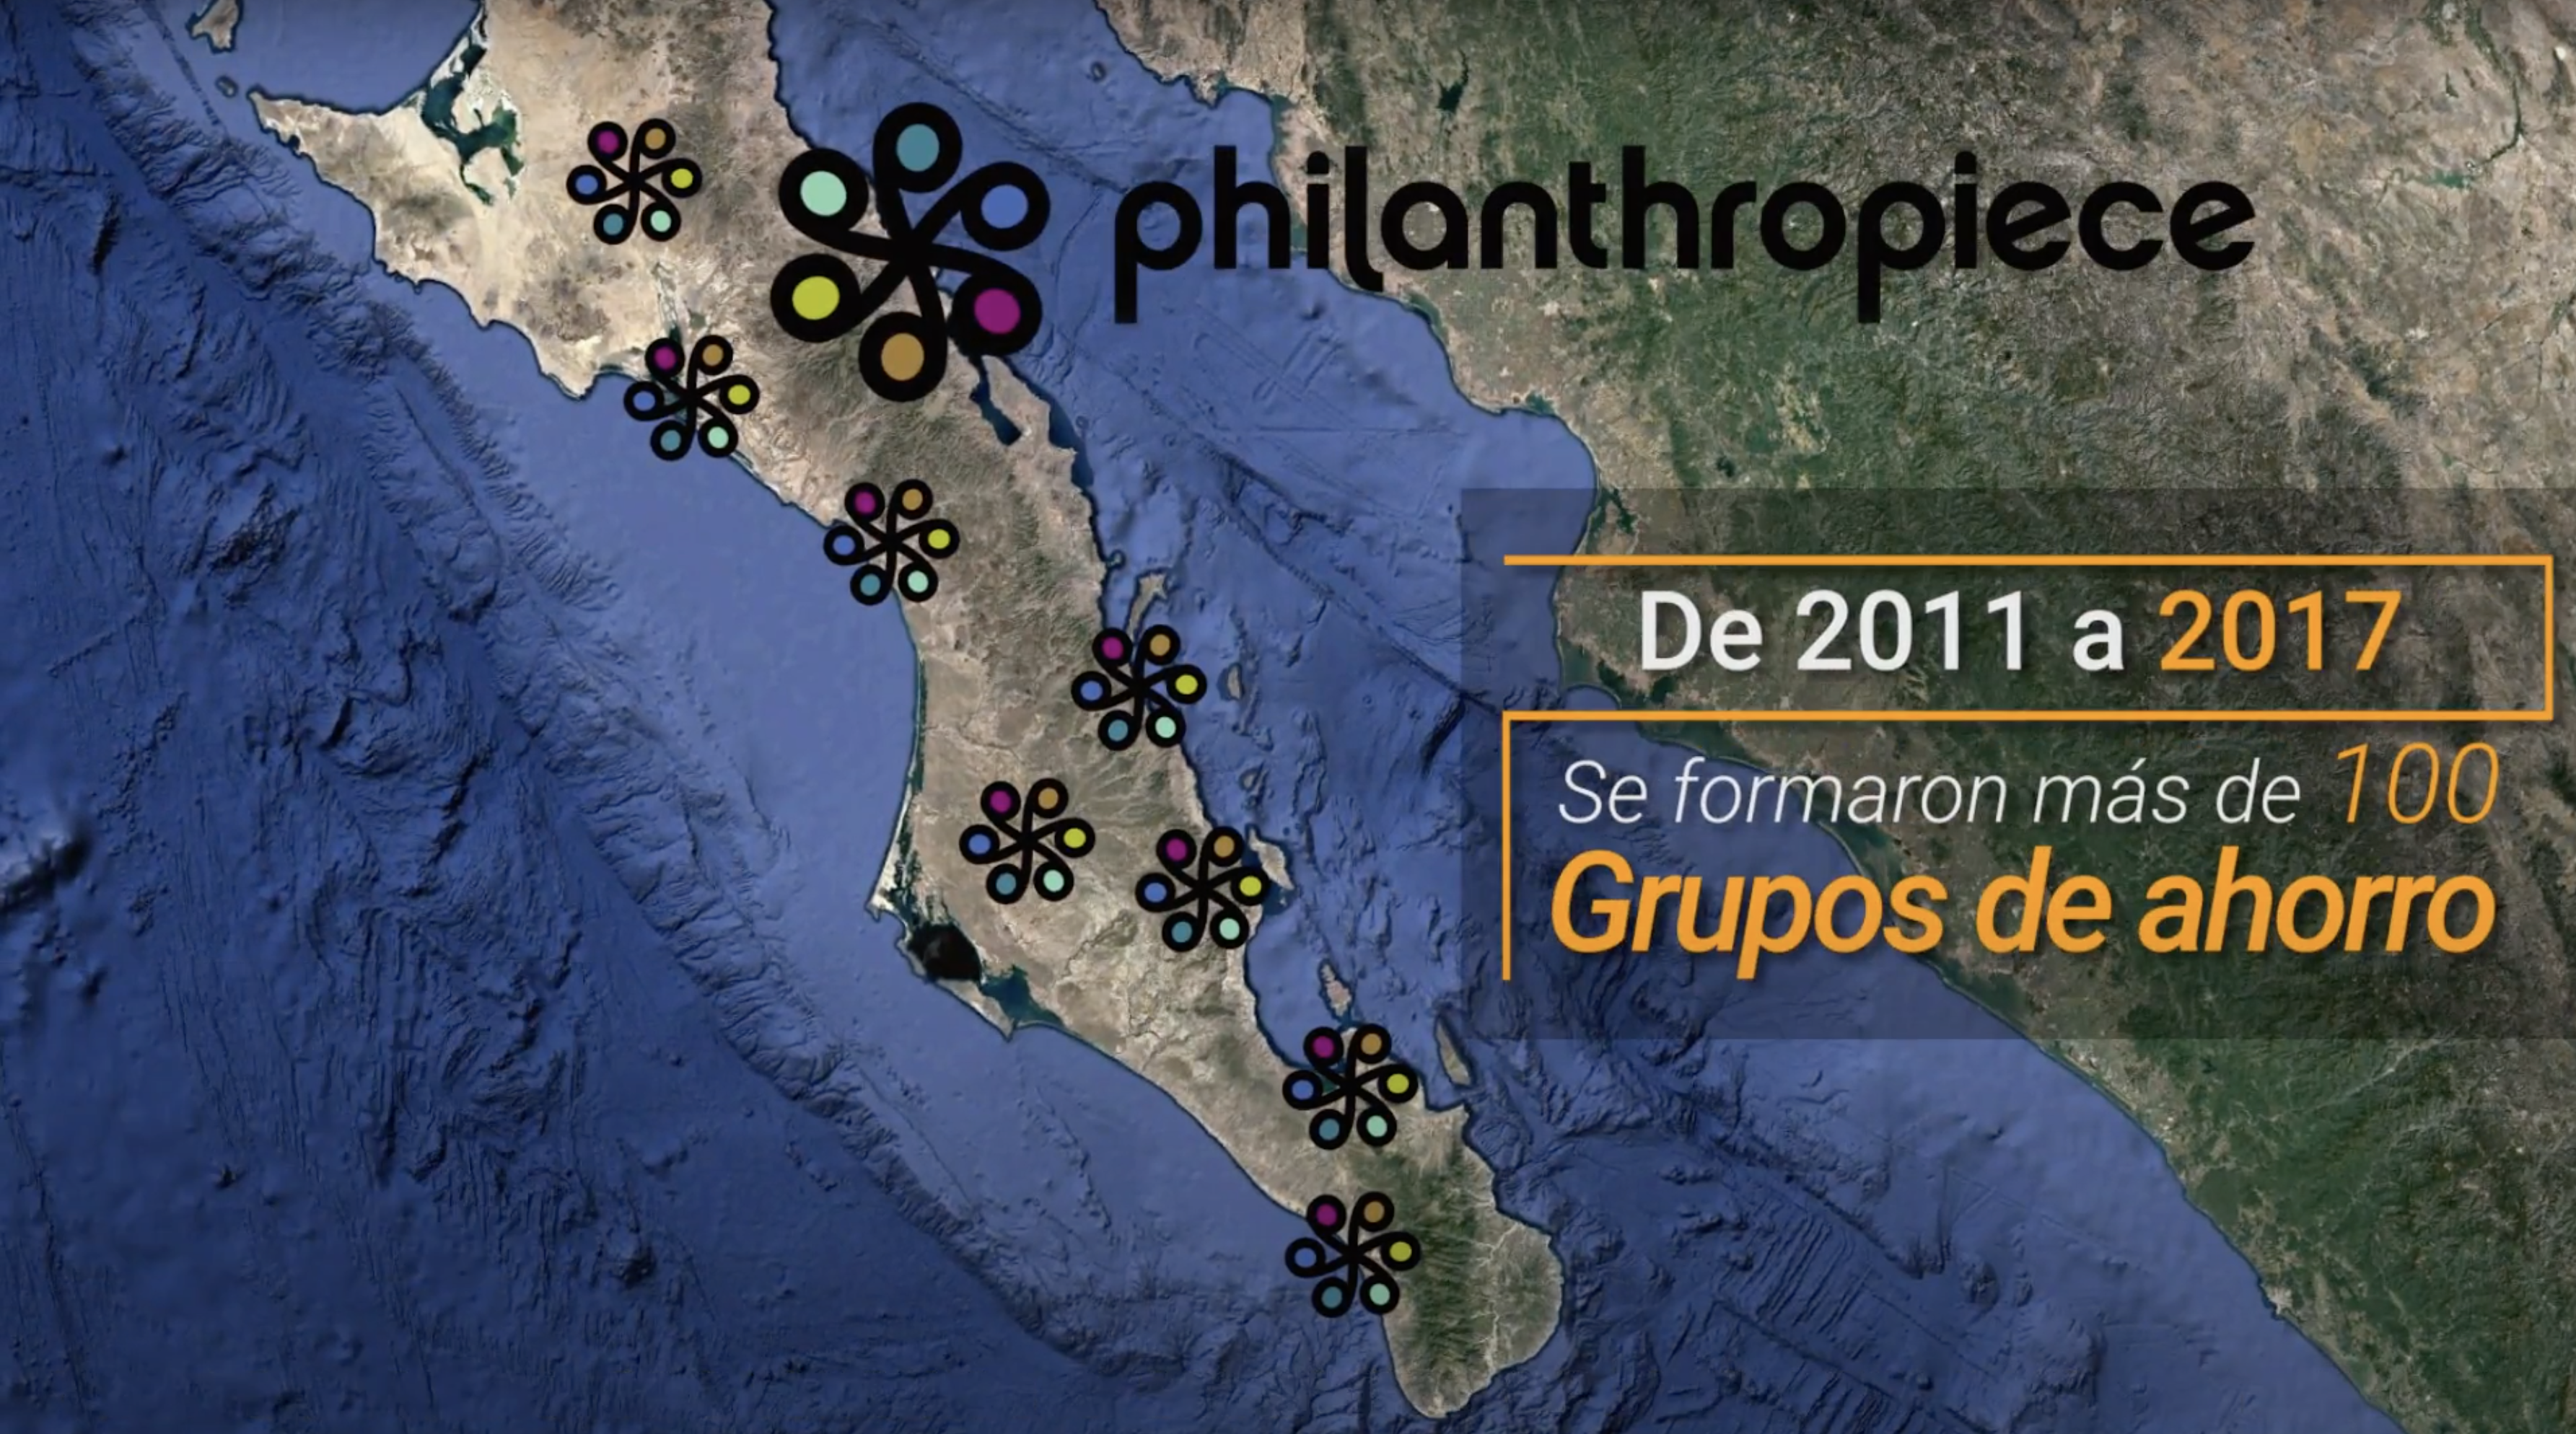 a map of baja california sur with philanthropiece logos and a text block that says 'de 2011 a 2017 se formaron mas de 100 grupos de ahorro'